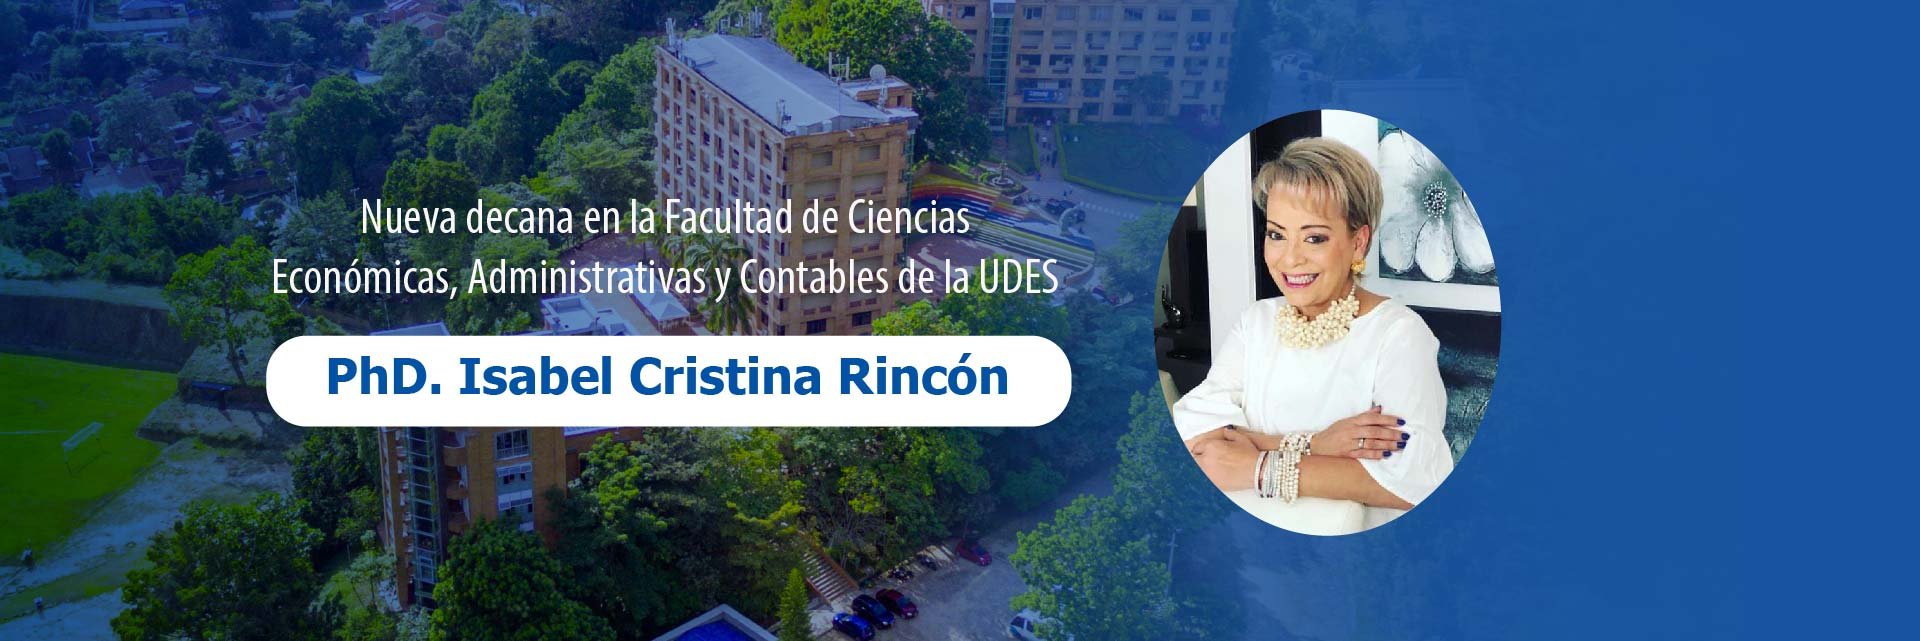 PhD. Isabel Cristina Rincón